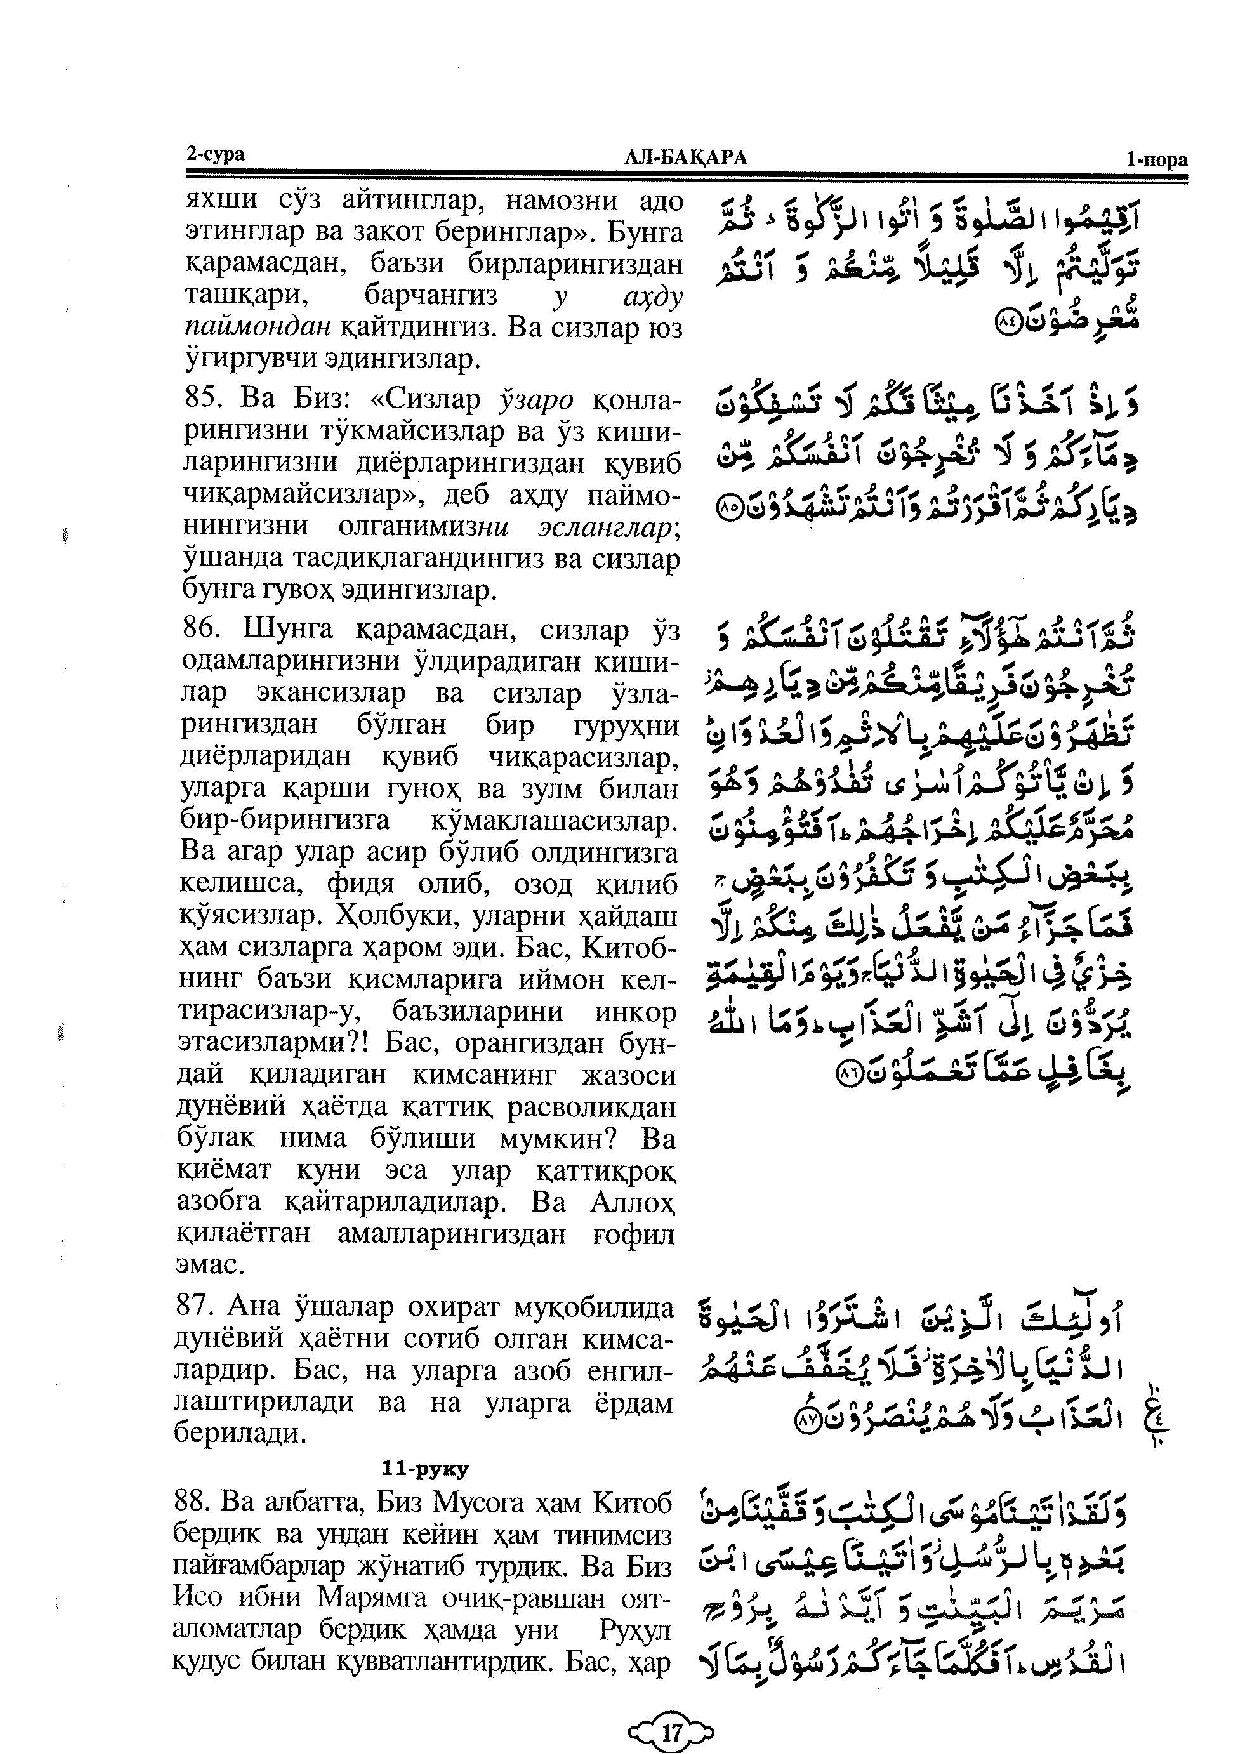 002-al-baqarah-page-015